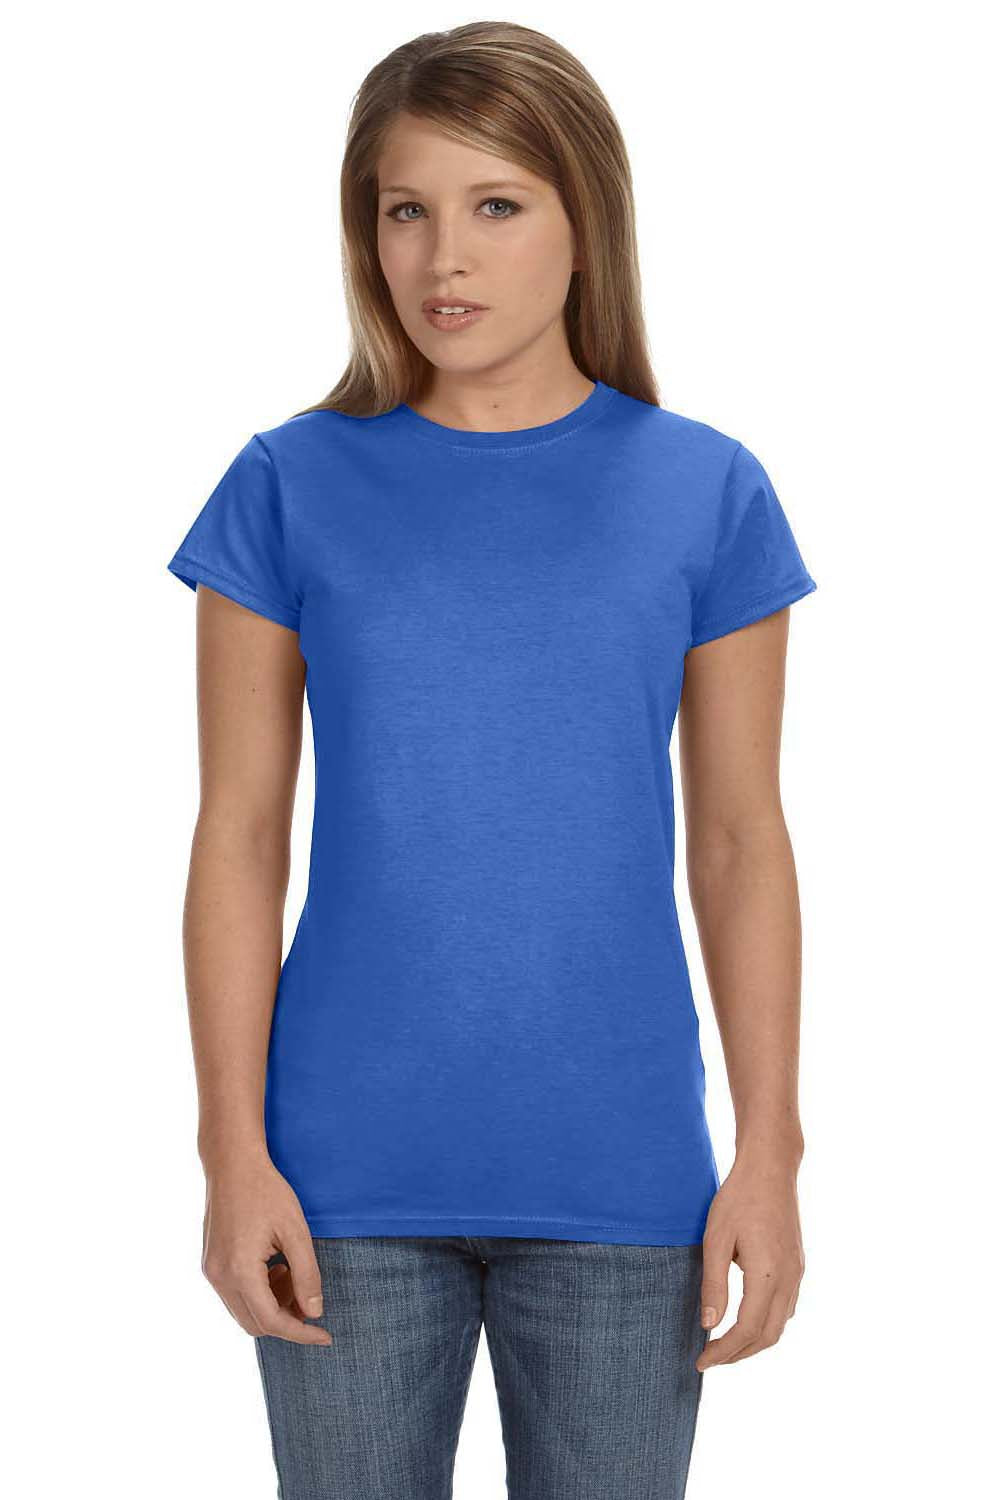 Gildan G640L Womens Softstyle Short Sleeve Crewneck T-Shirt Heather Royal Blue Front